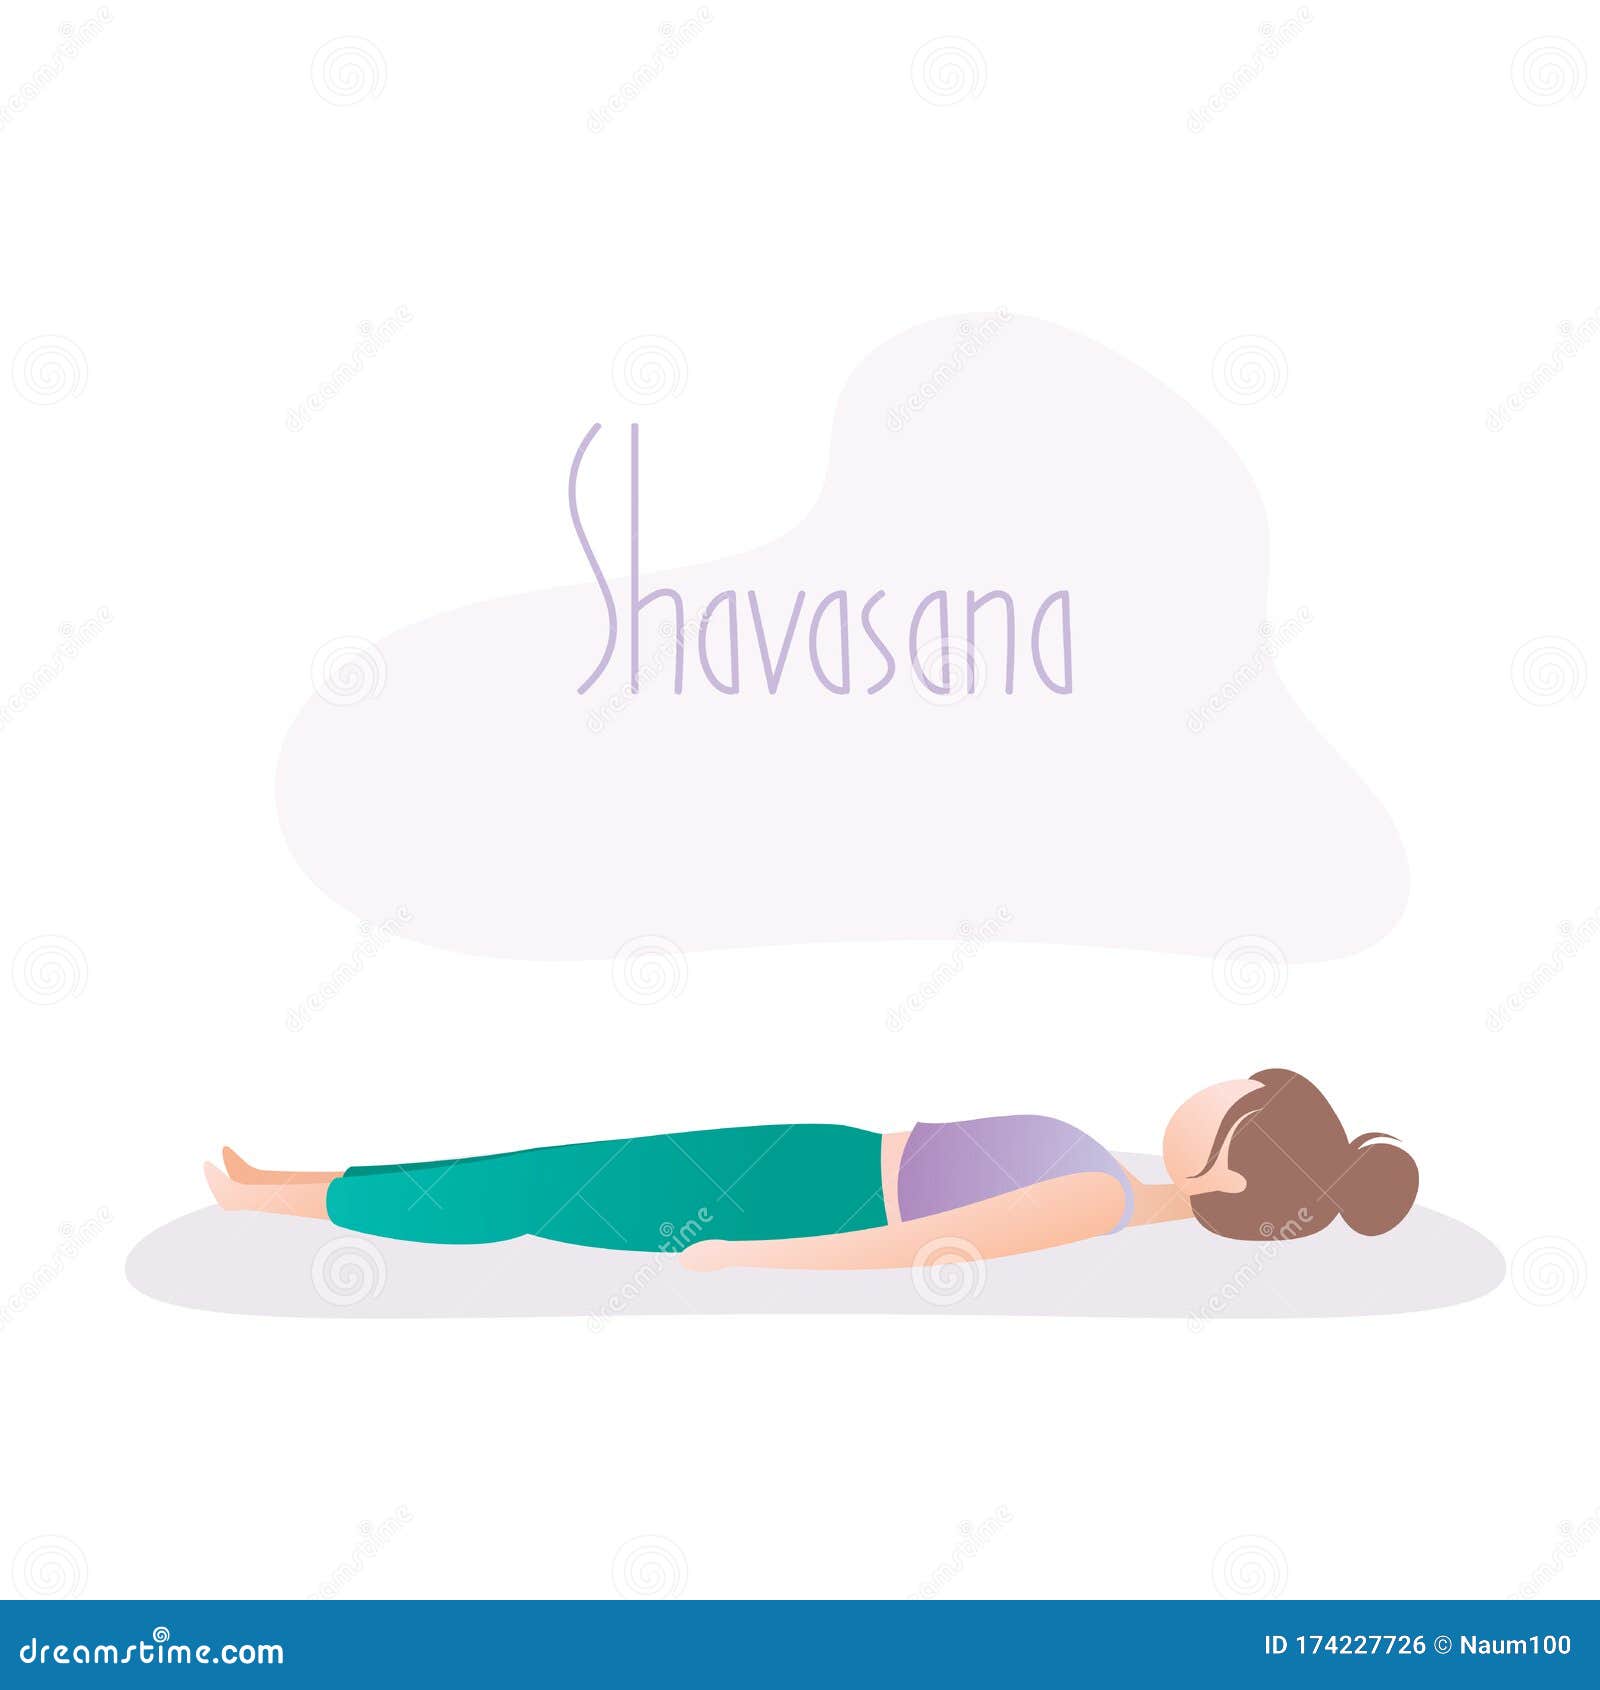 What are the benefits of Shavasana? - Quora